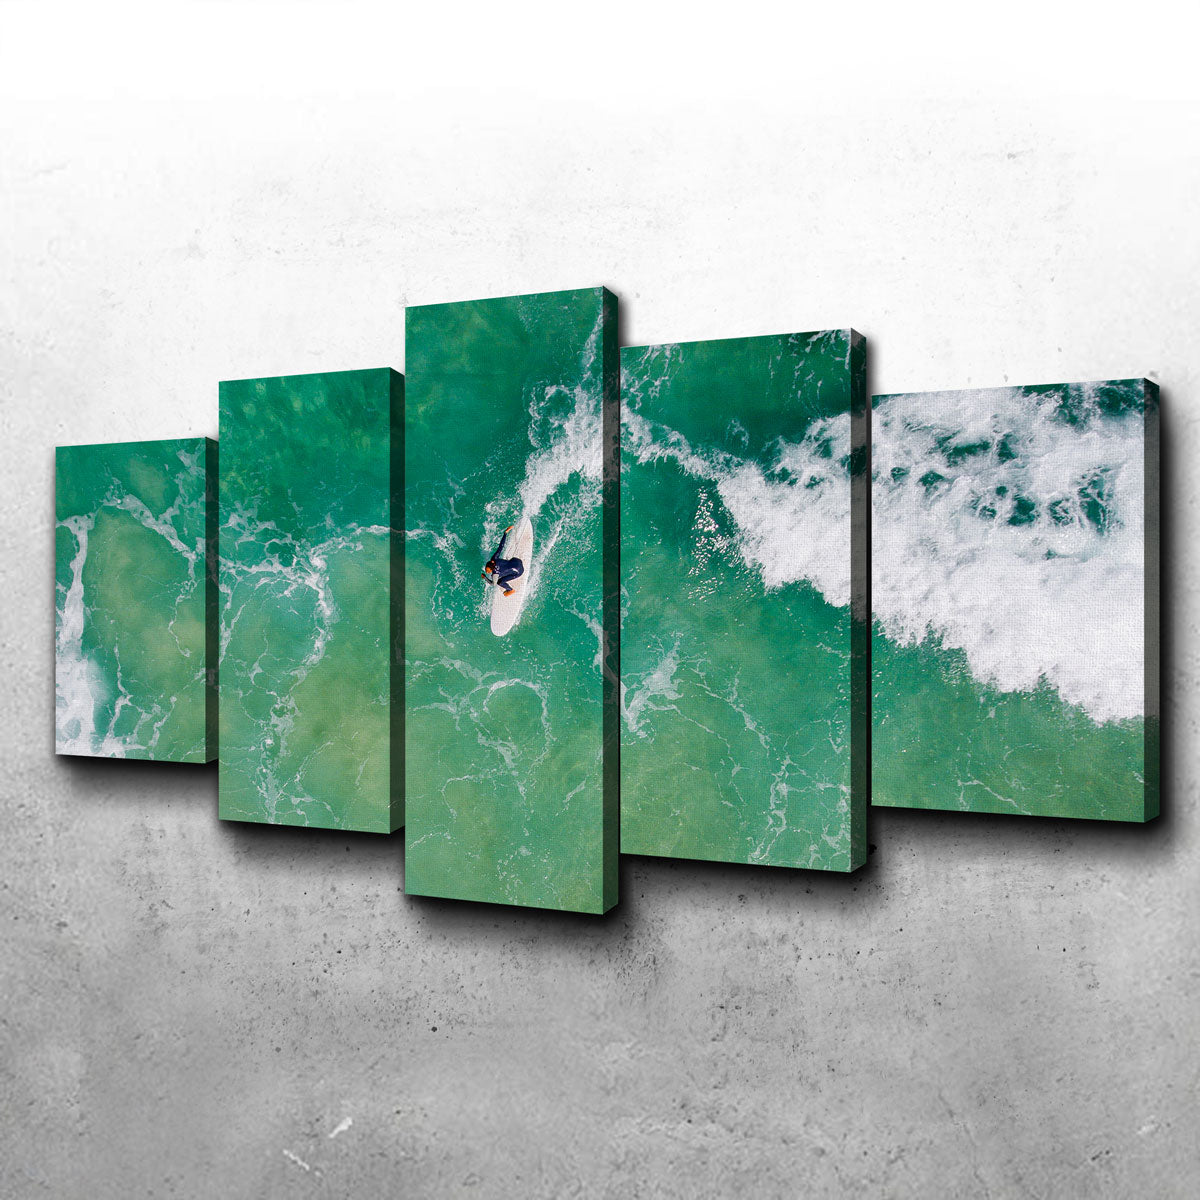 Green Surf